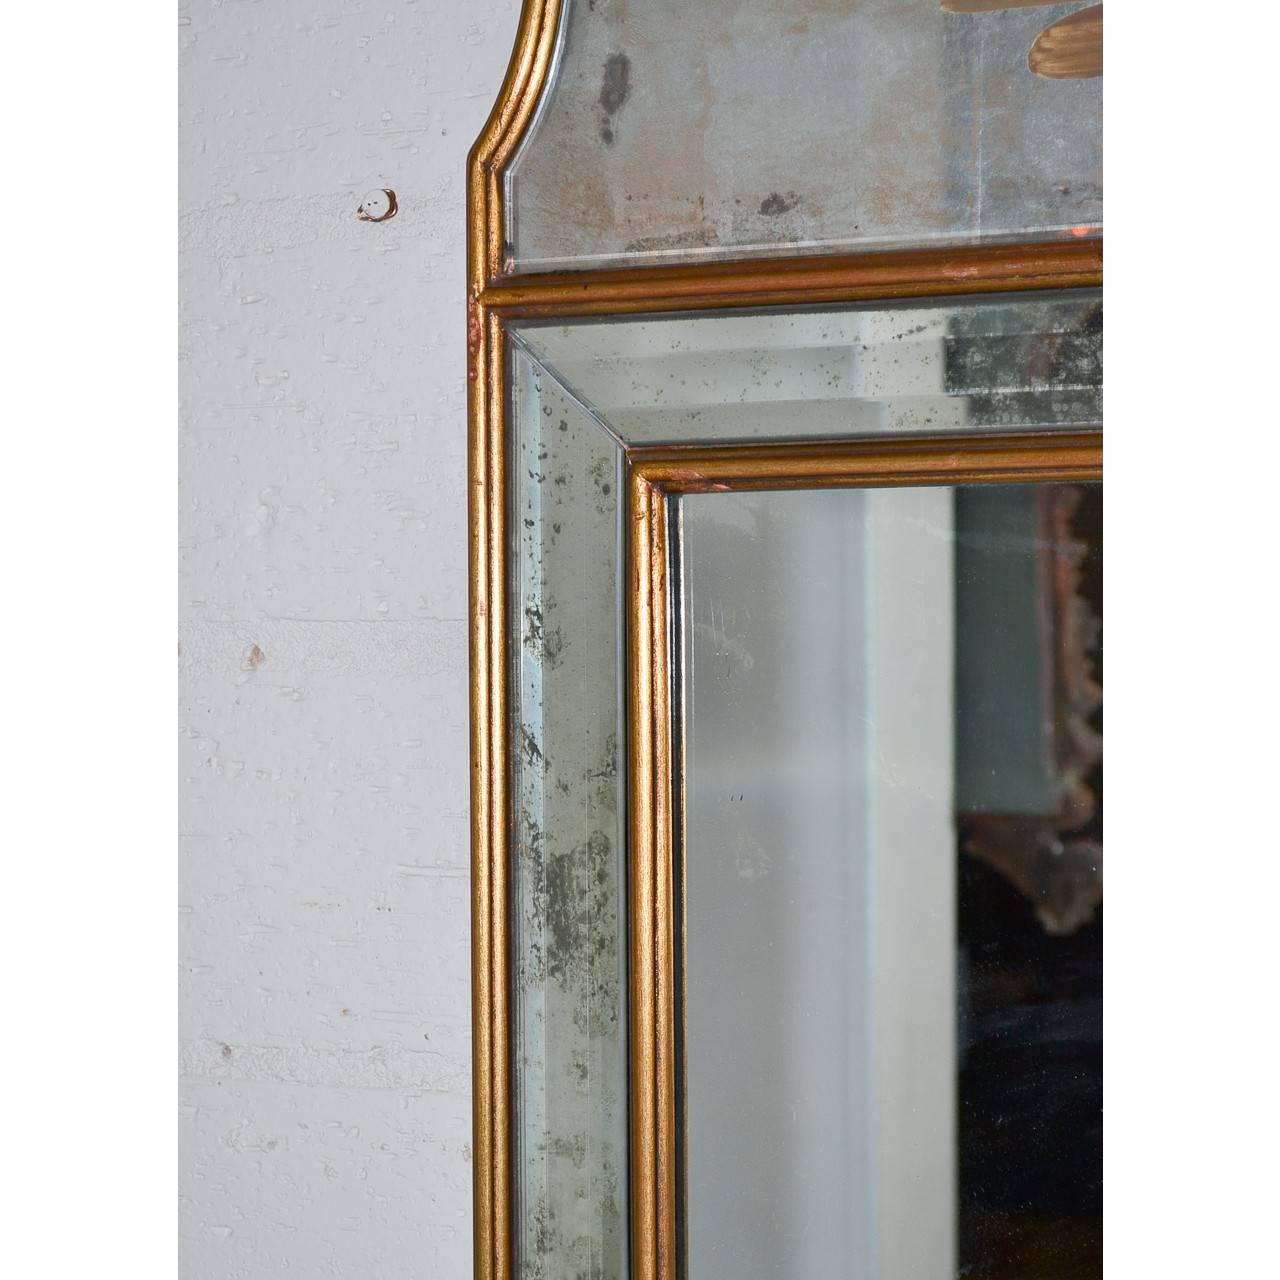 Unusual 20th century Venetian glass mirror with reverse painting in oriental motif.